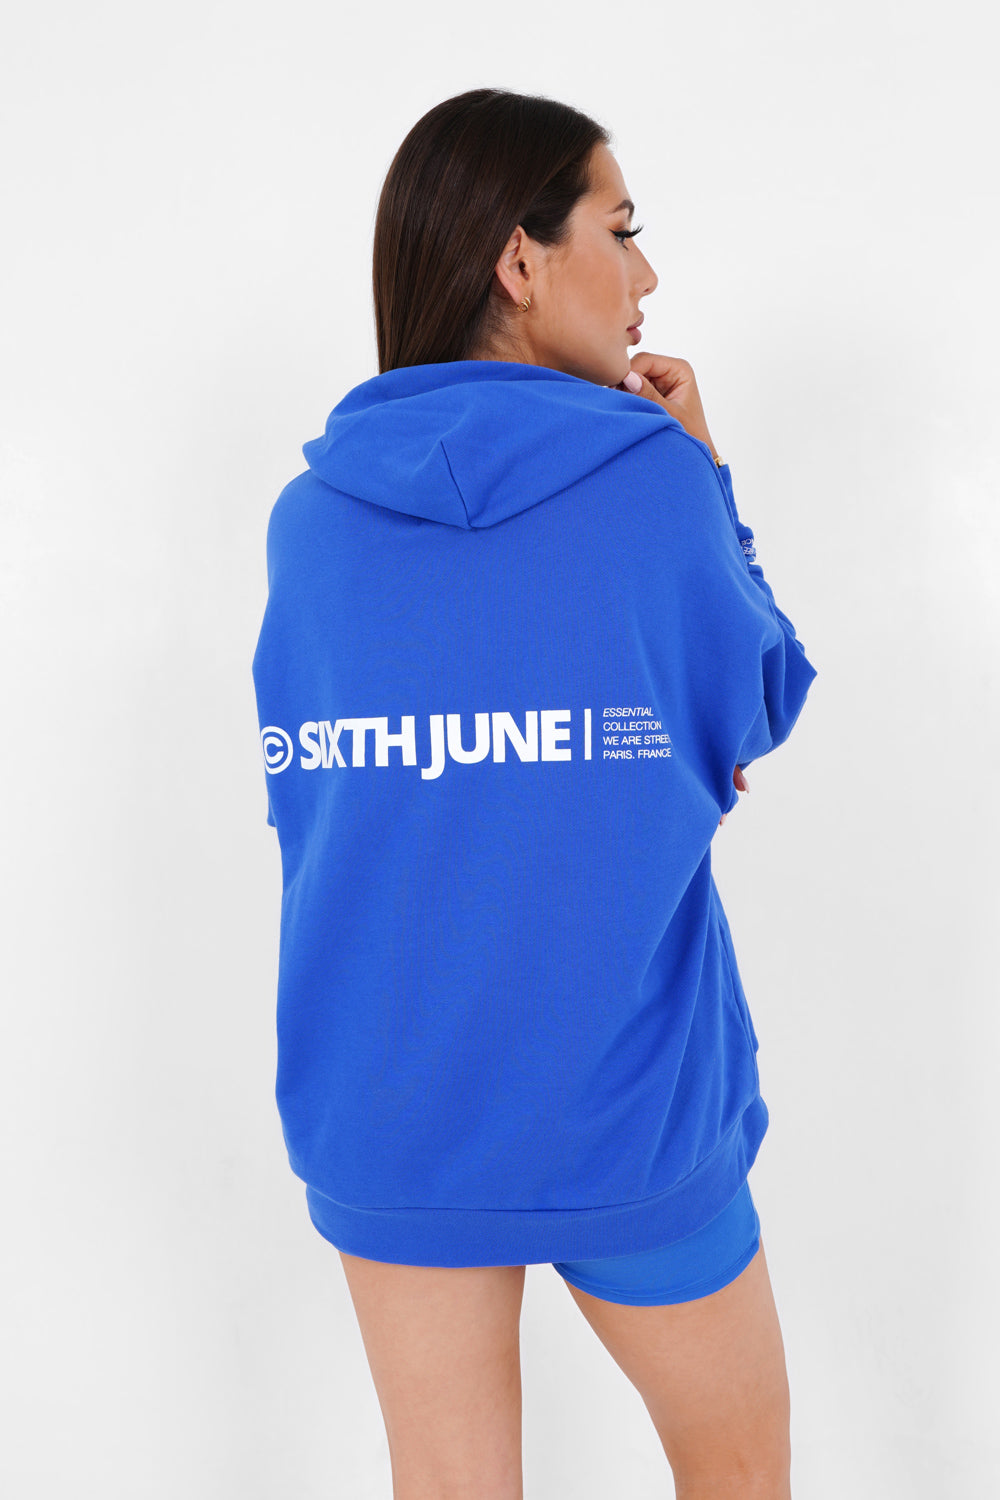 Oversize logo hoodie Blue